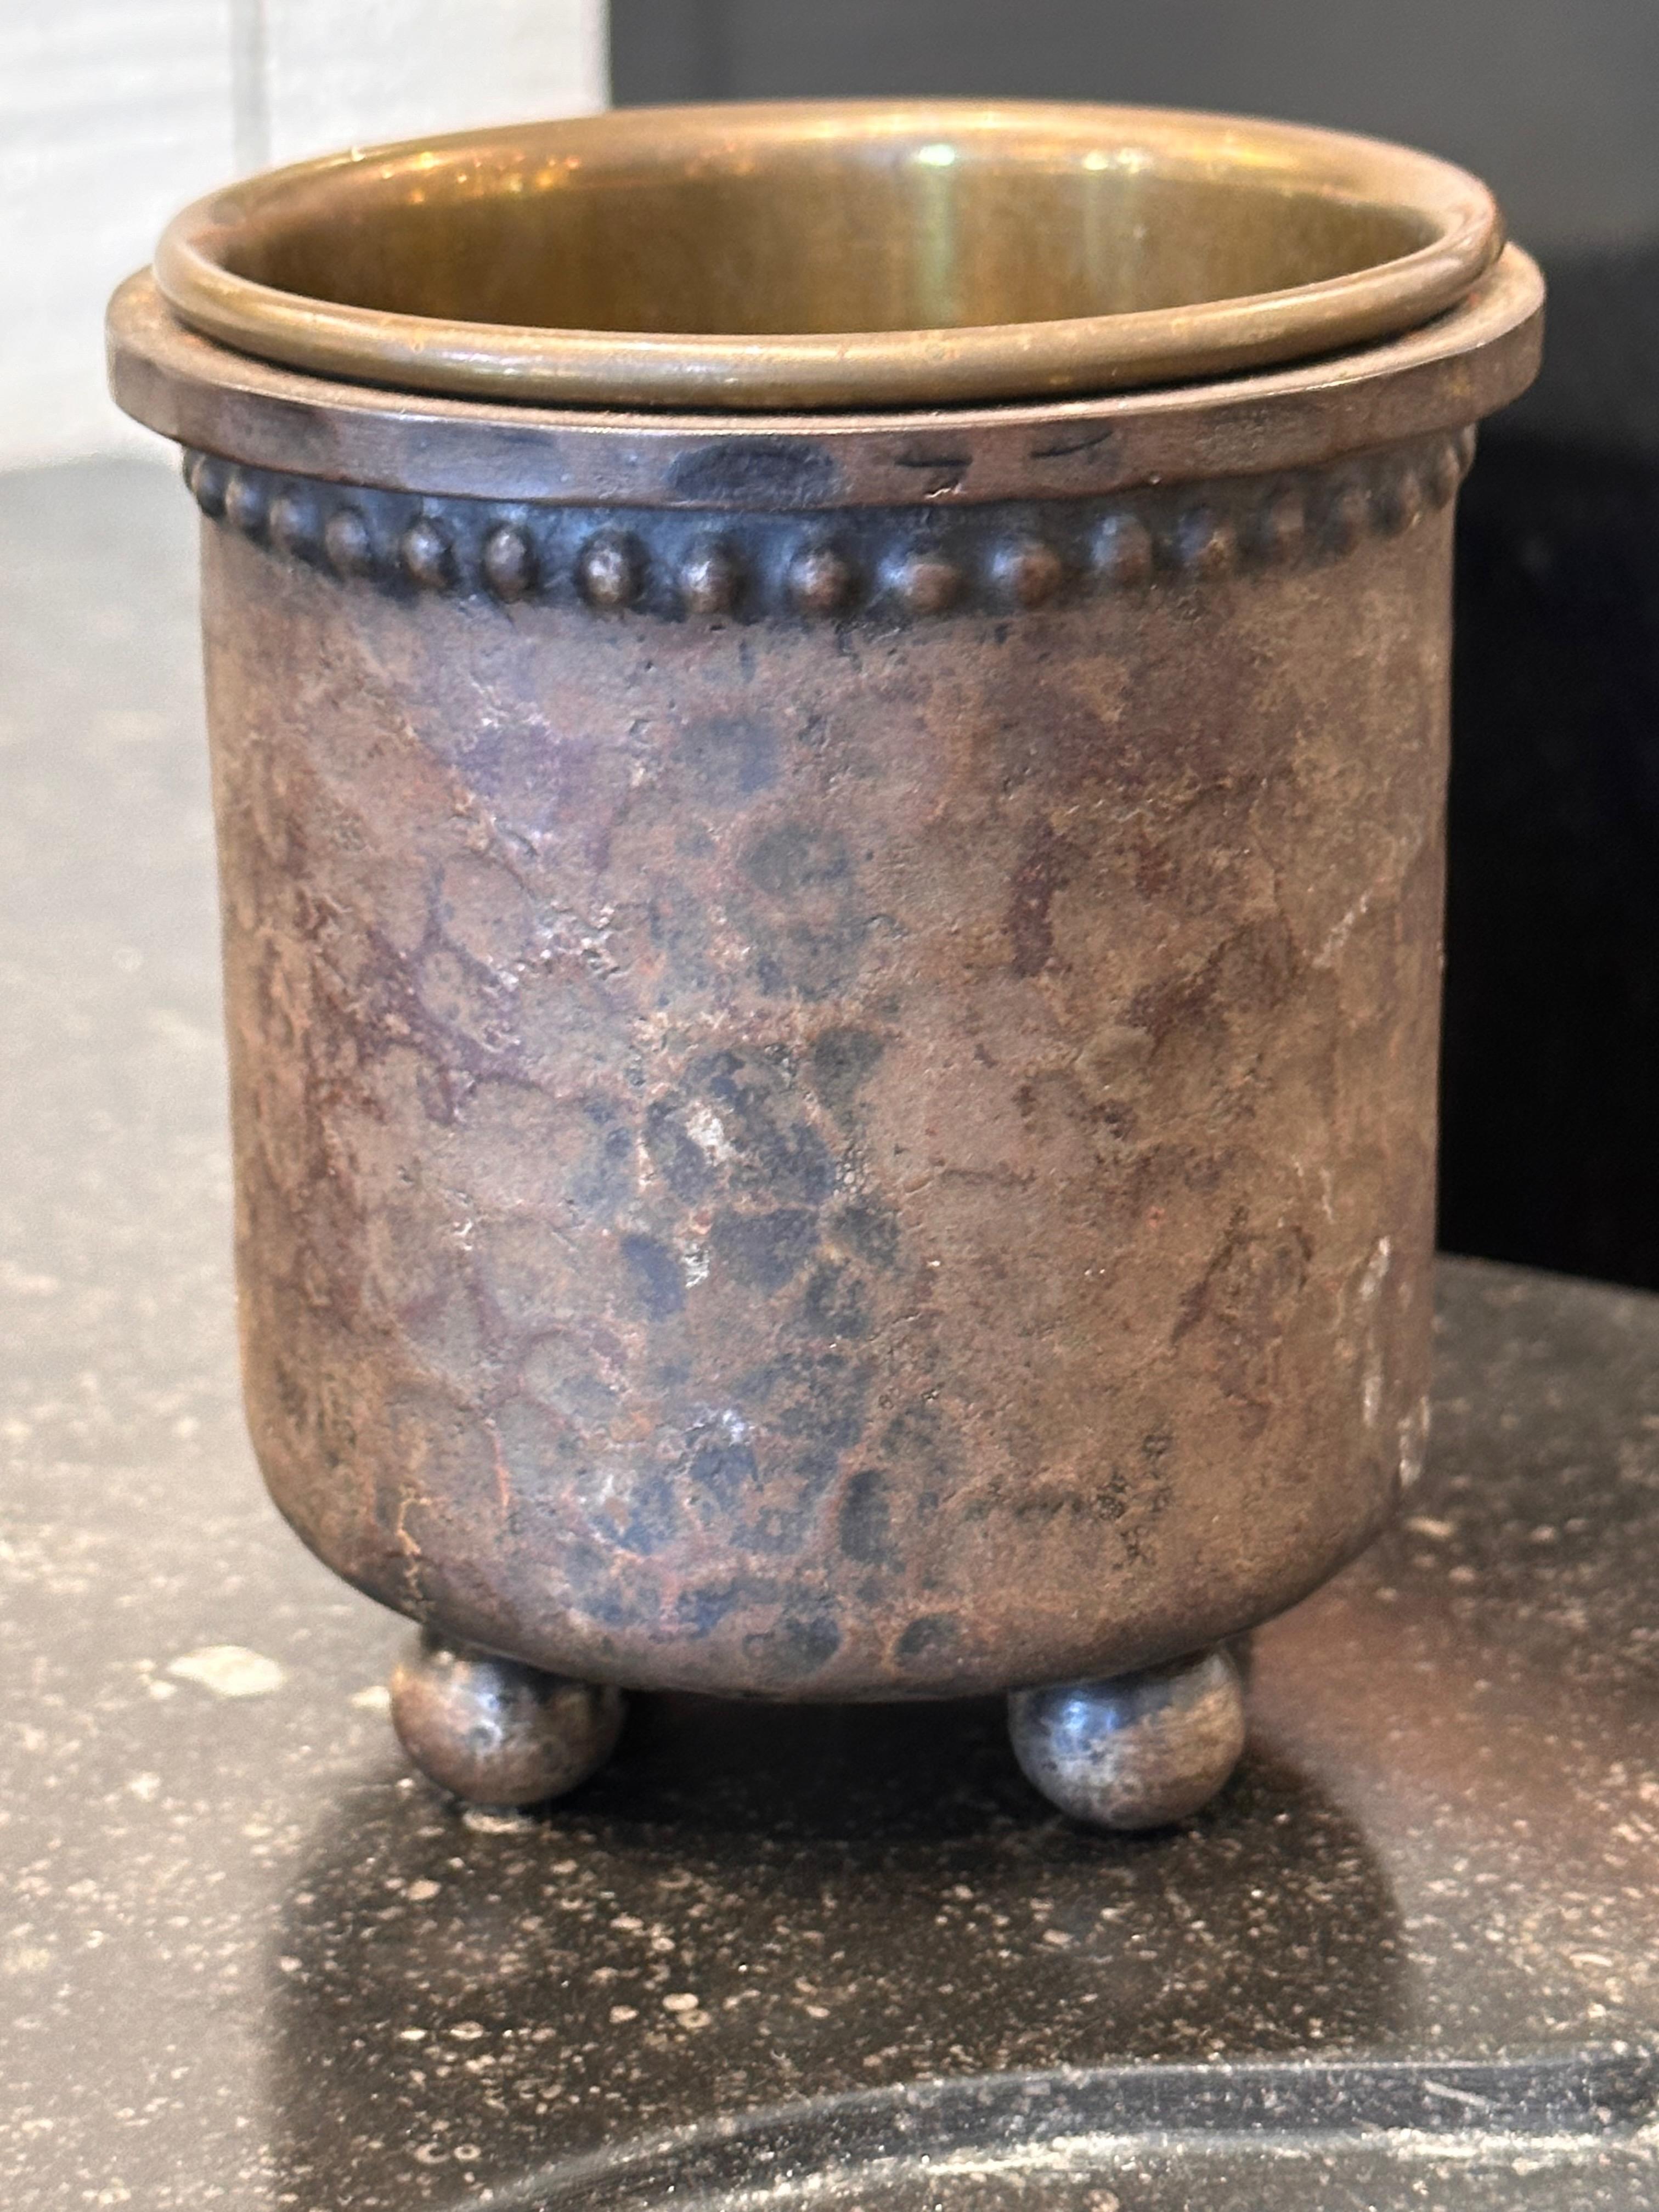 Quelques petits pots décoratifs. Vers la fin du 19e siècle.
Grand : 4 